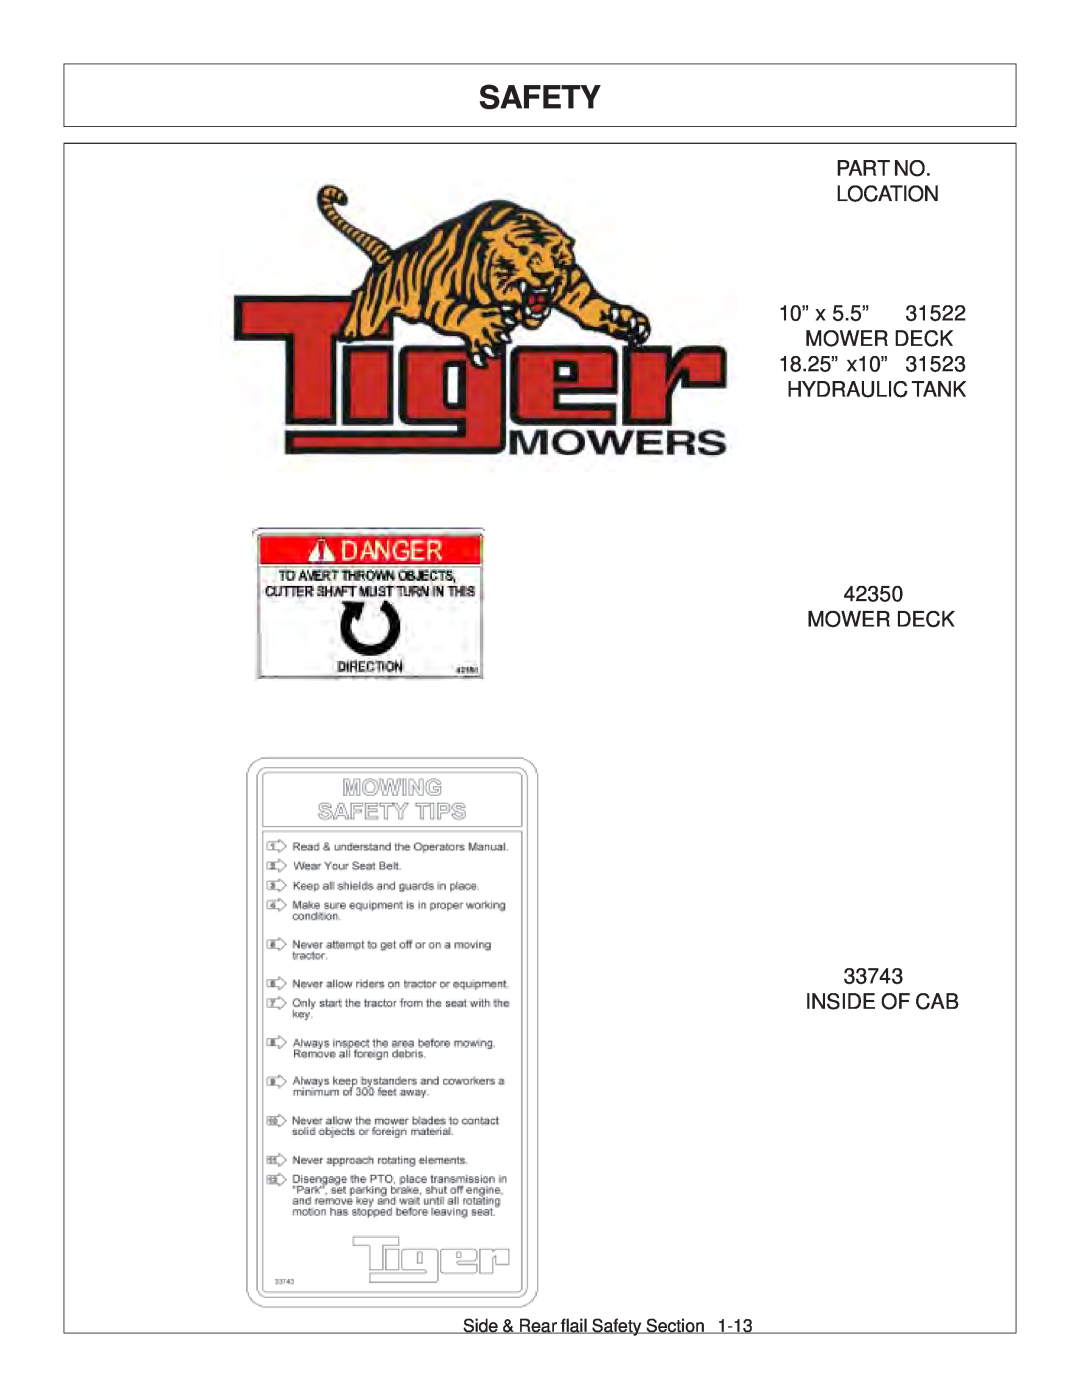 Tiger JD 5093E, JD 5083E Safety, LOCATION 10” x 5.5” MOWER DECK 18.25” x10” HYDRAULIC TANK, MOWER DECK 33743 INSIDE OF CAB 